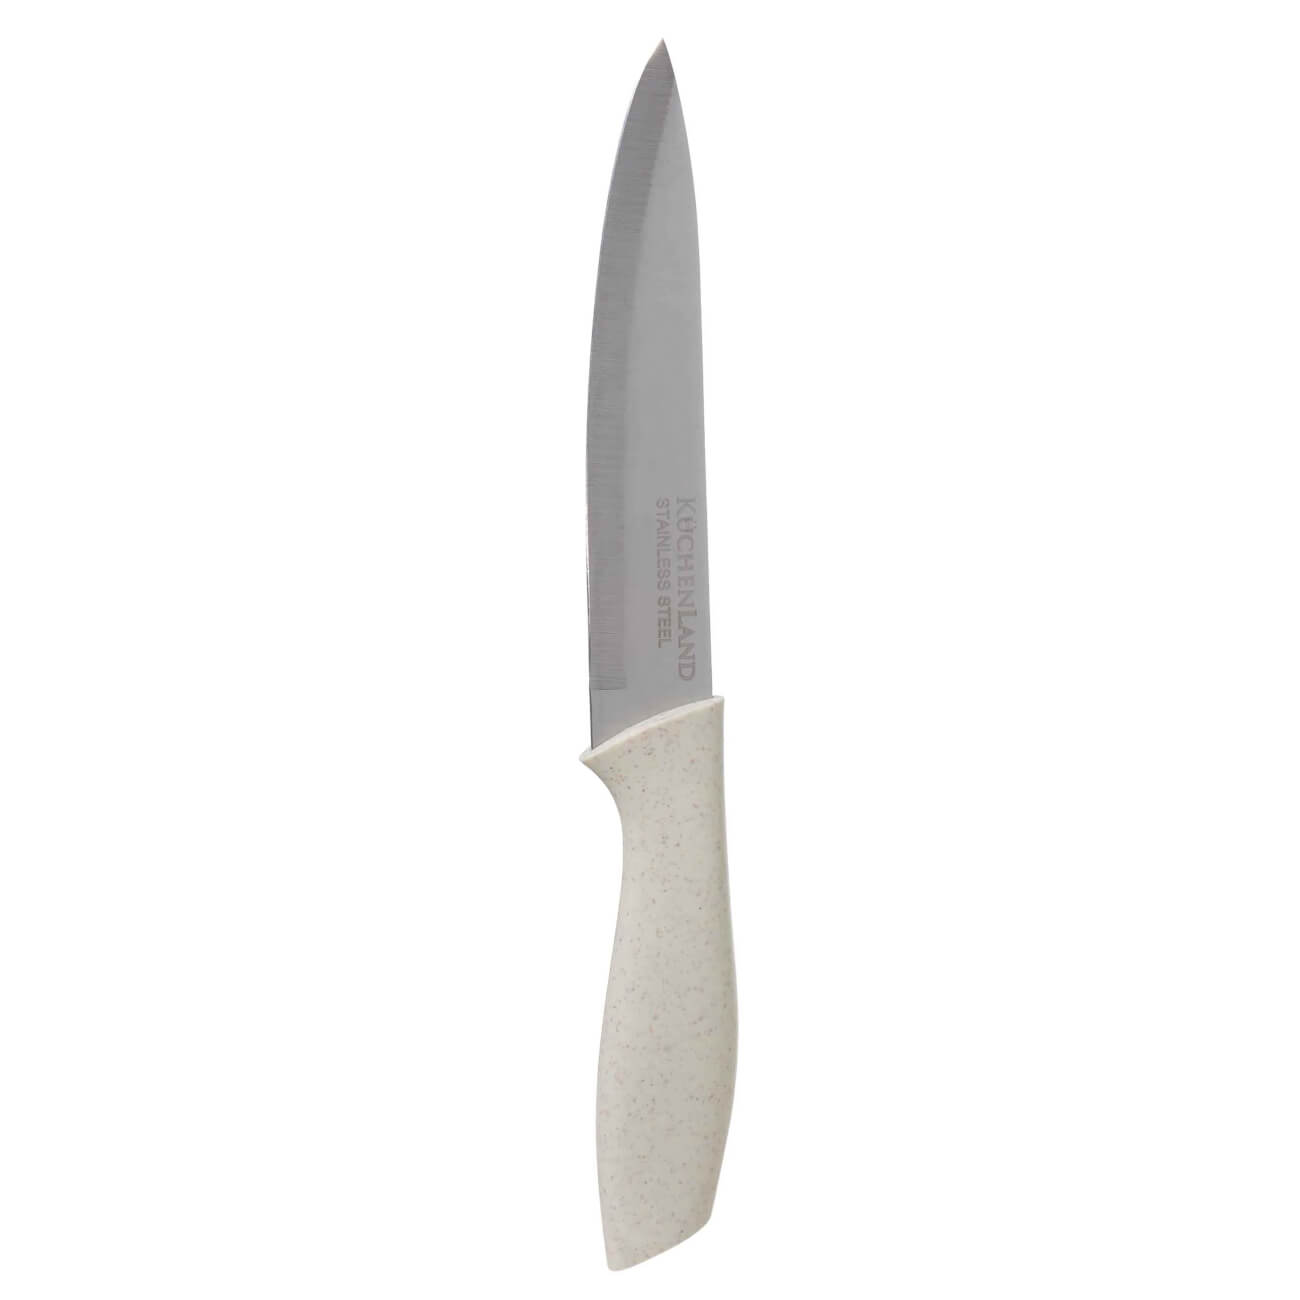 Нож для нарезки, 15 см, сталь/пластик, молочный, Speck-light нож для нарезки henckels 31020 201